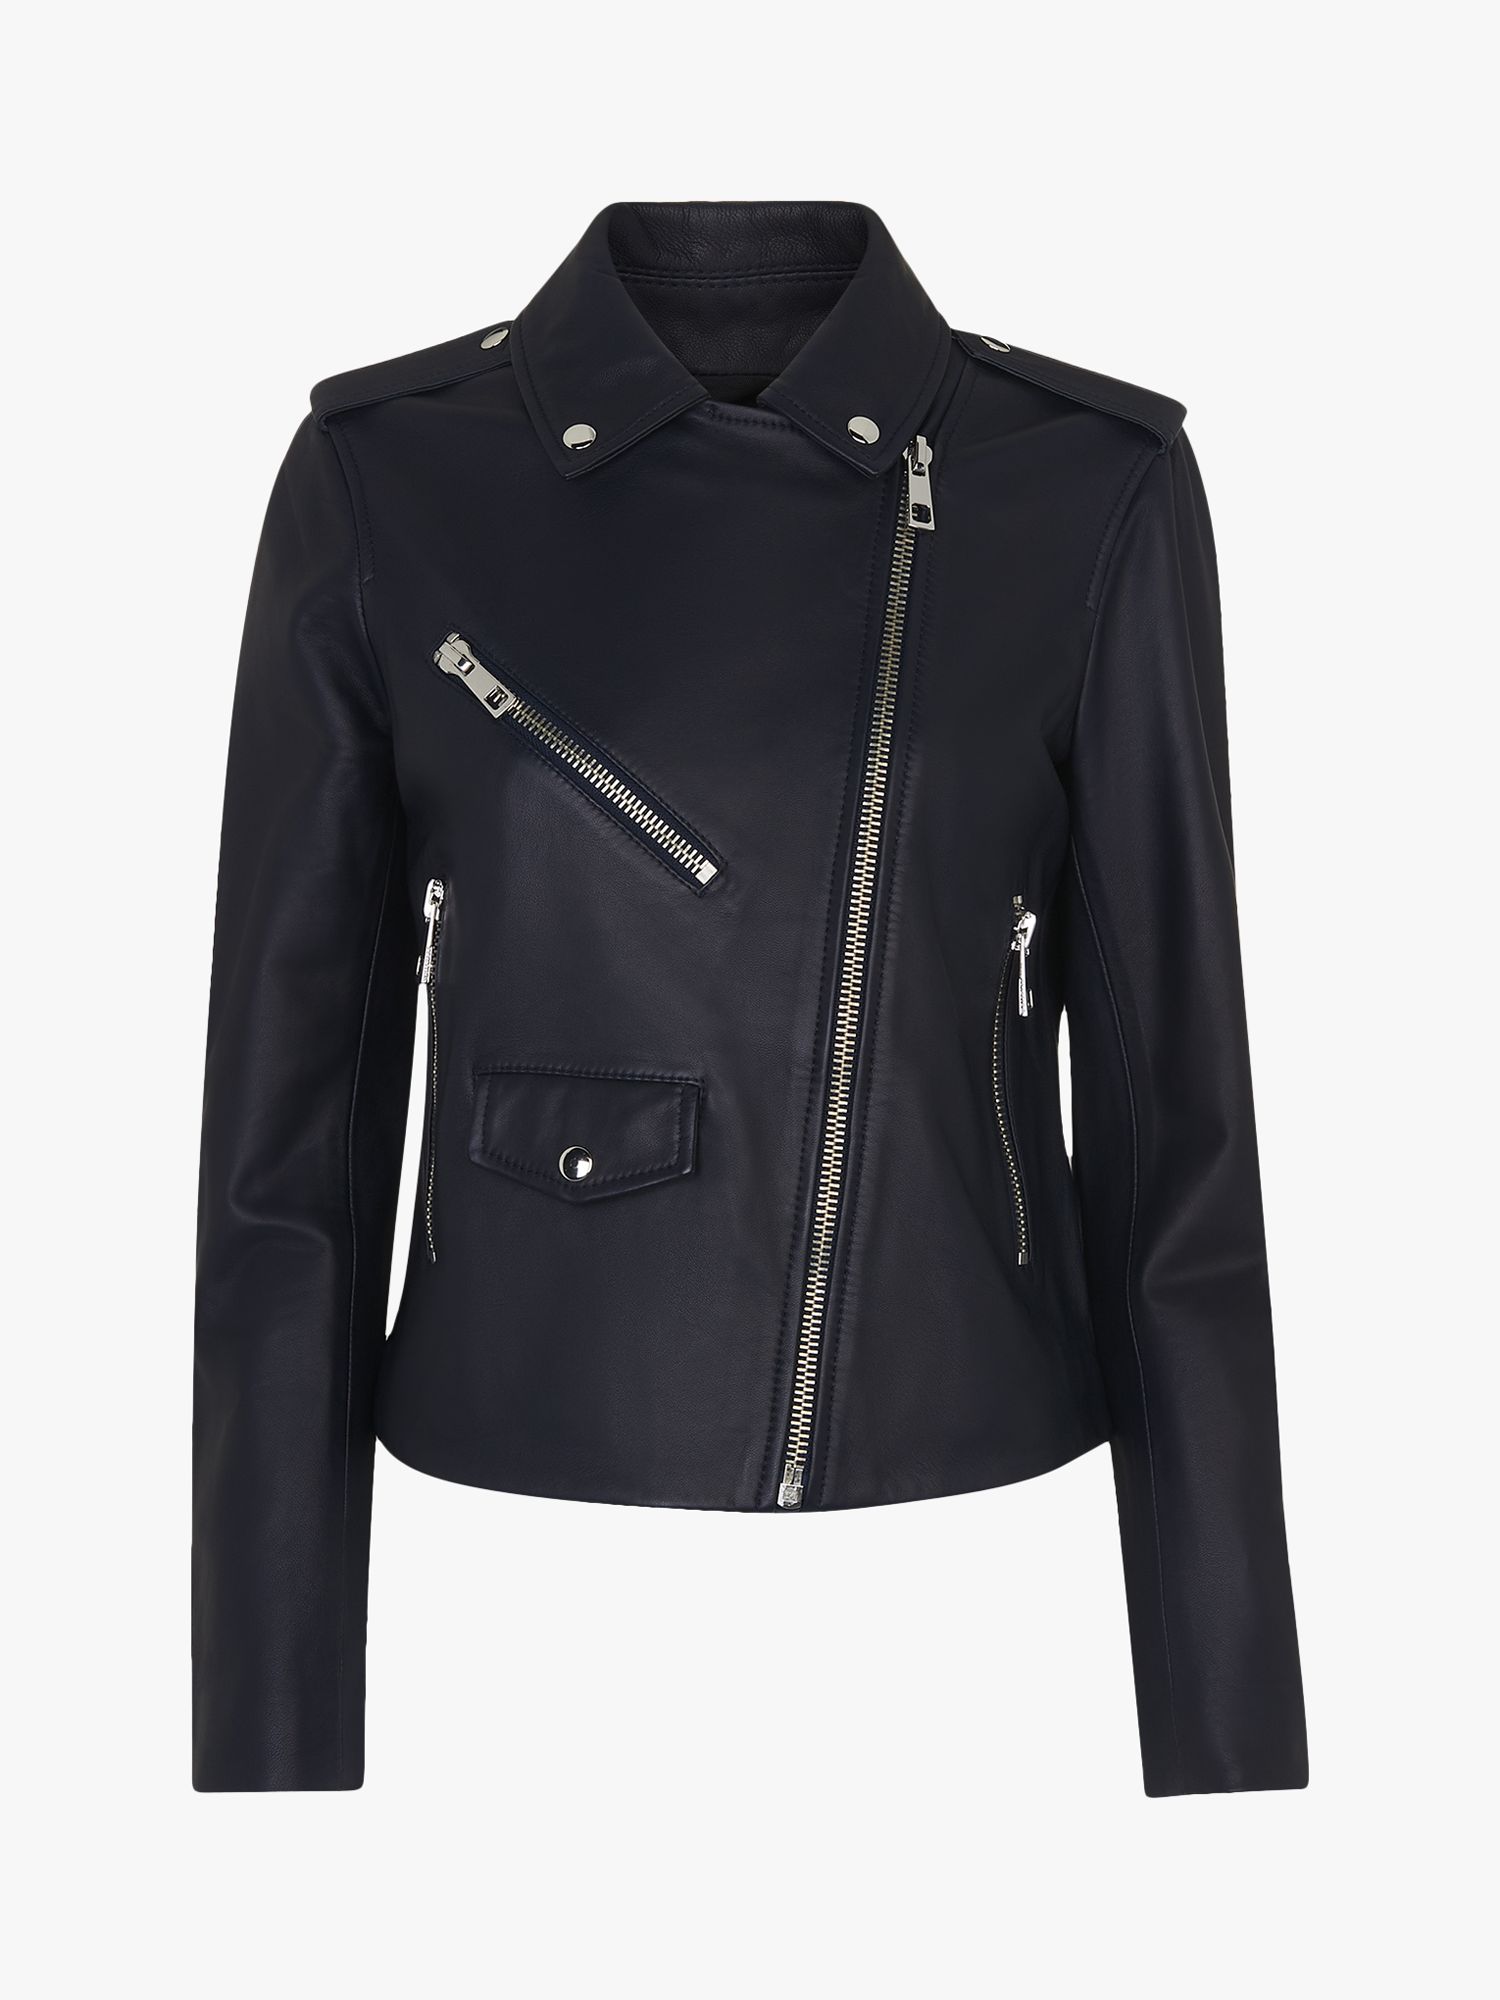 Whistles Agnes Pocket Leather Jacket, Navy at John Lewis & Partners